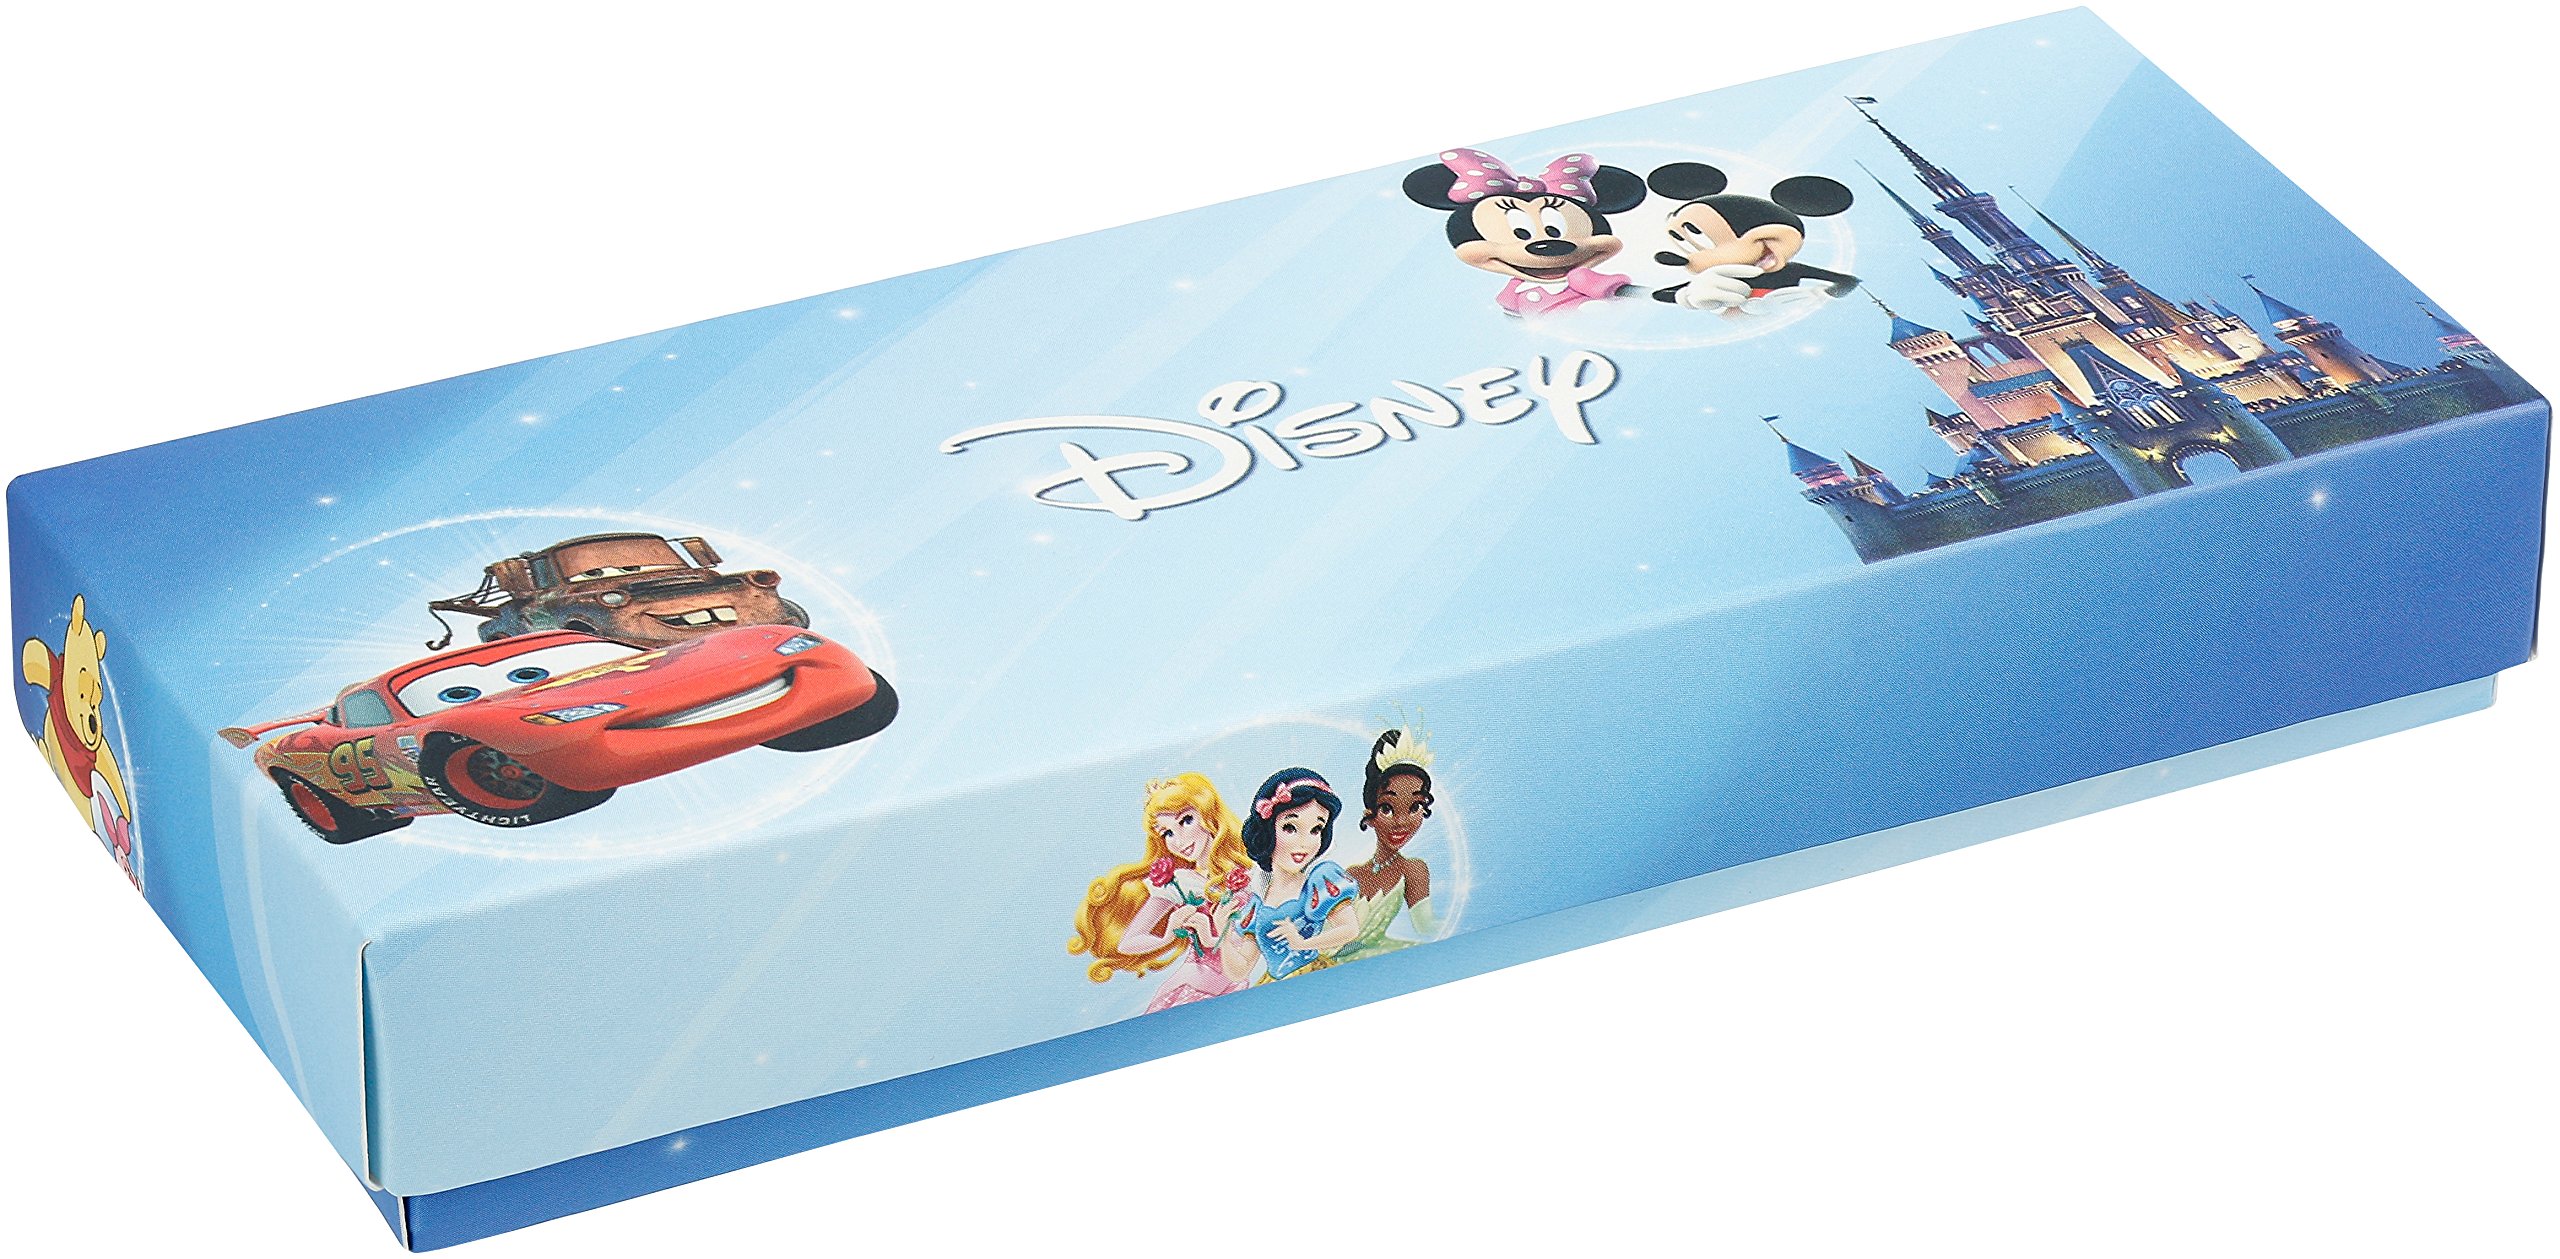 Disney Princess Kids' Plastic Time Teacher Analog Quartz 3D Strap Watch